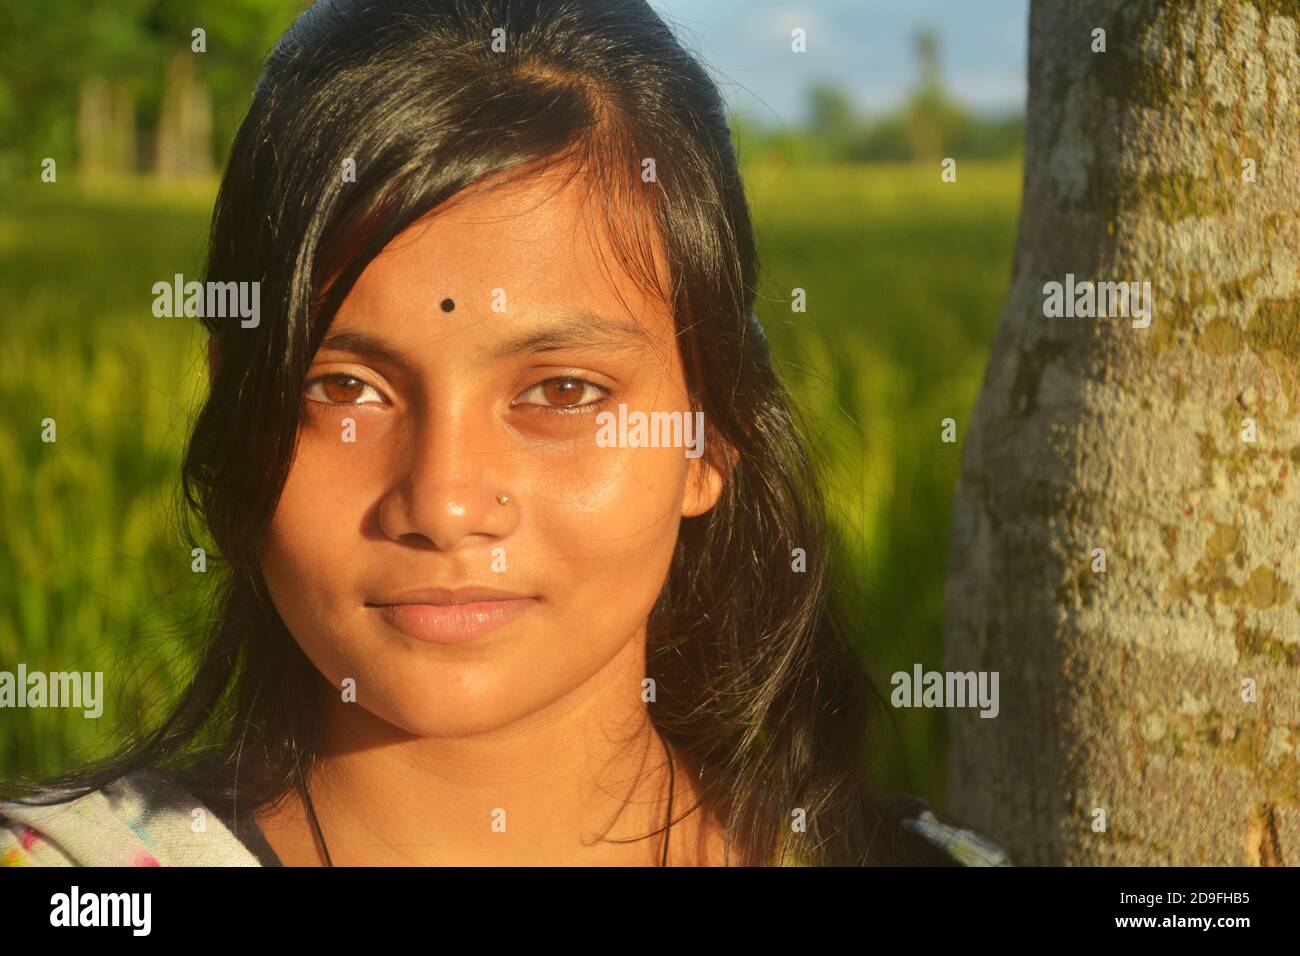 woman on face hindu items